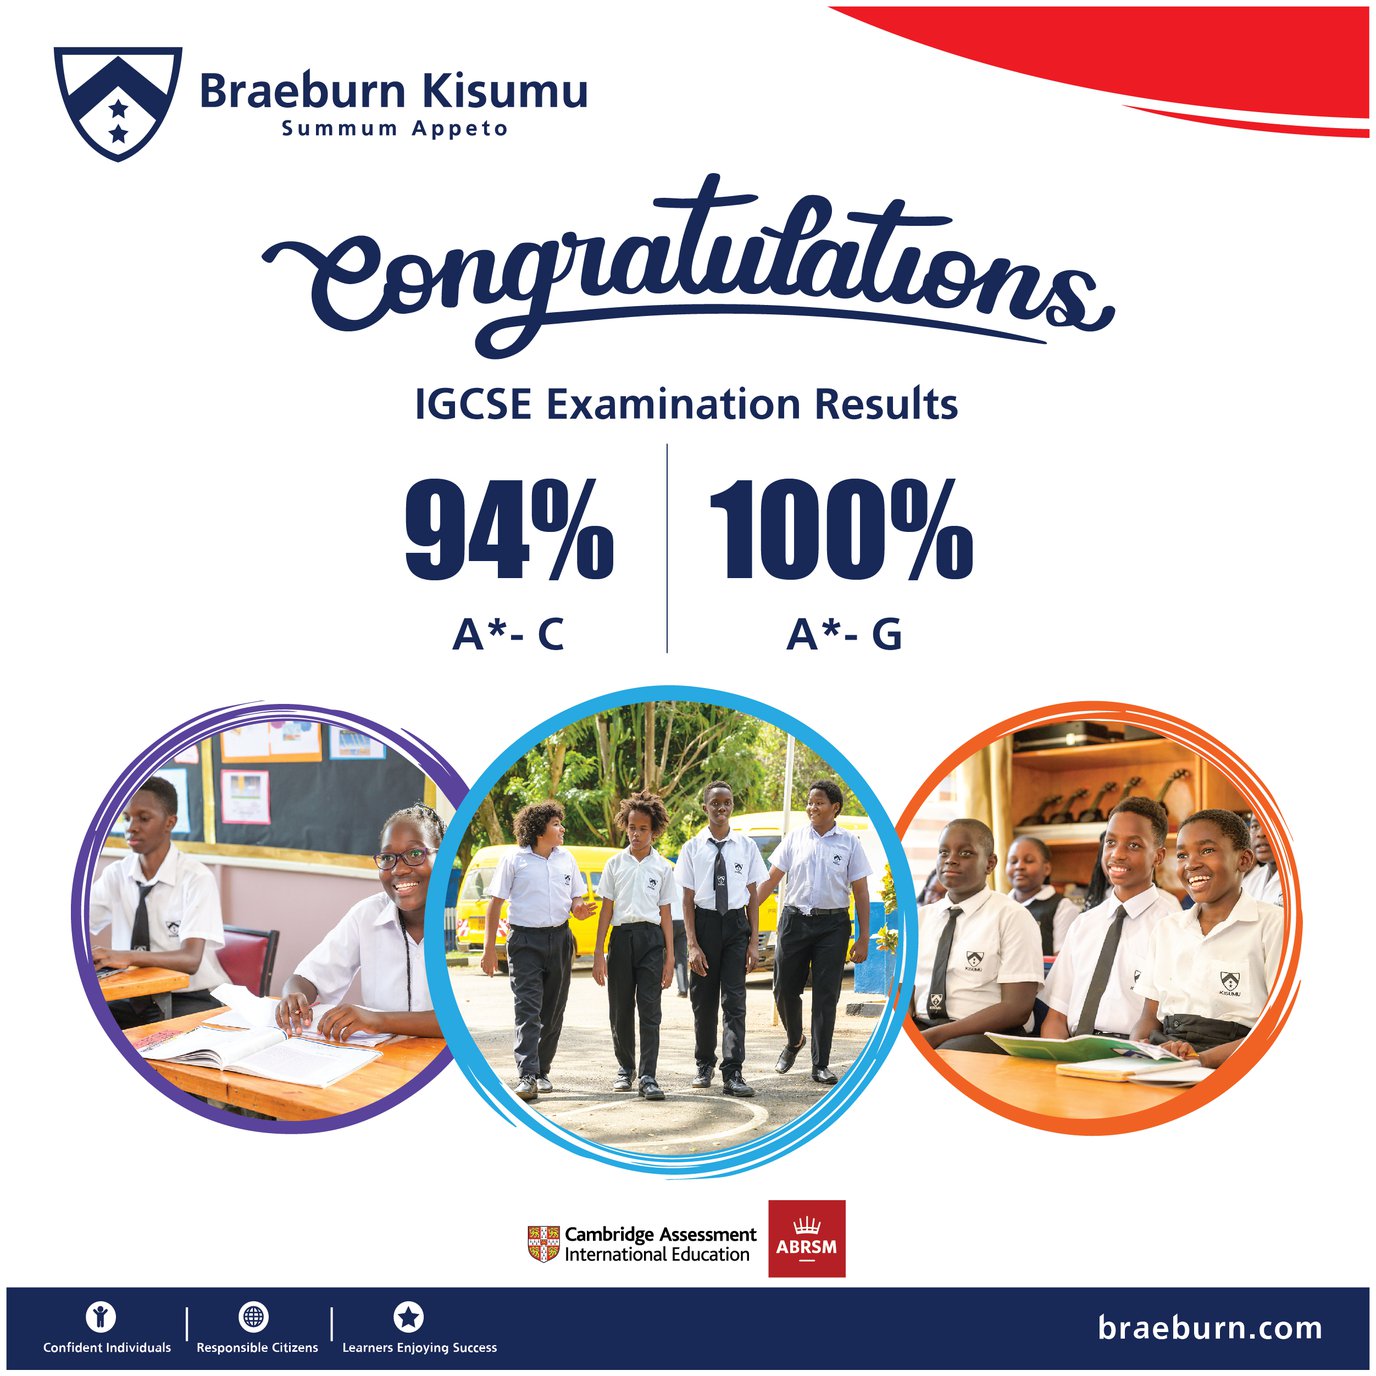 Braeburn Kisumu exam results (2).jpg